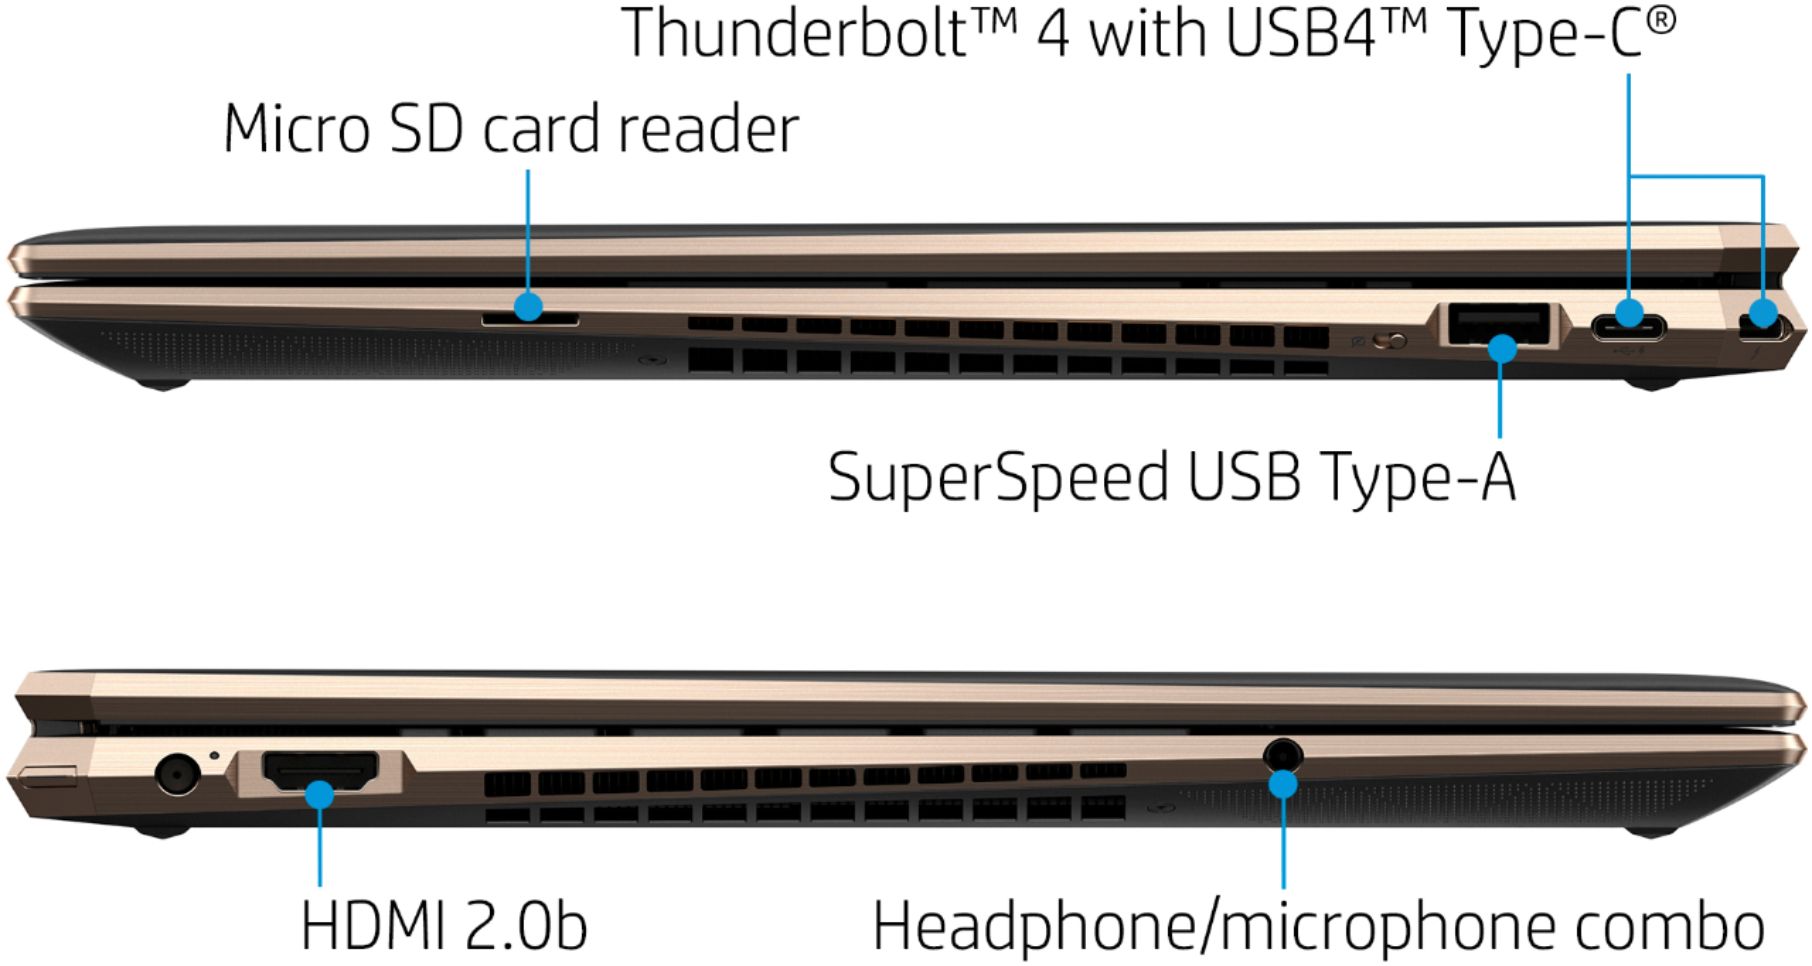 HP Spectre x360 2-in-1 15.6 4K Ultra HD TouchScreen Laptop (8th Gen Intel  Ice Lake i7-8550U 16GB Ram 512GB SSD NVIDIA MX150 Thunderbolt Win 10 Dark